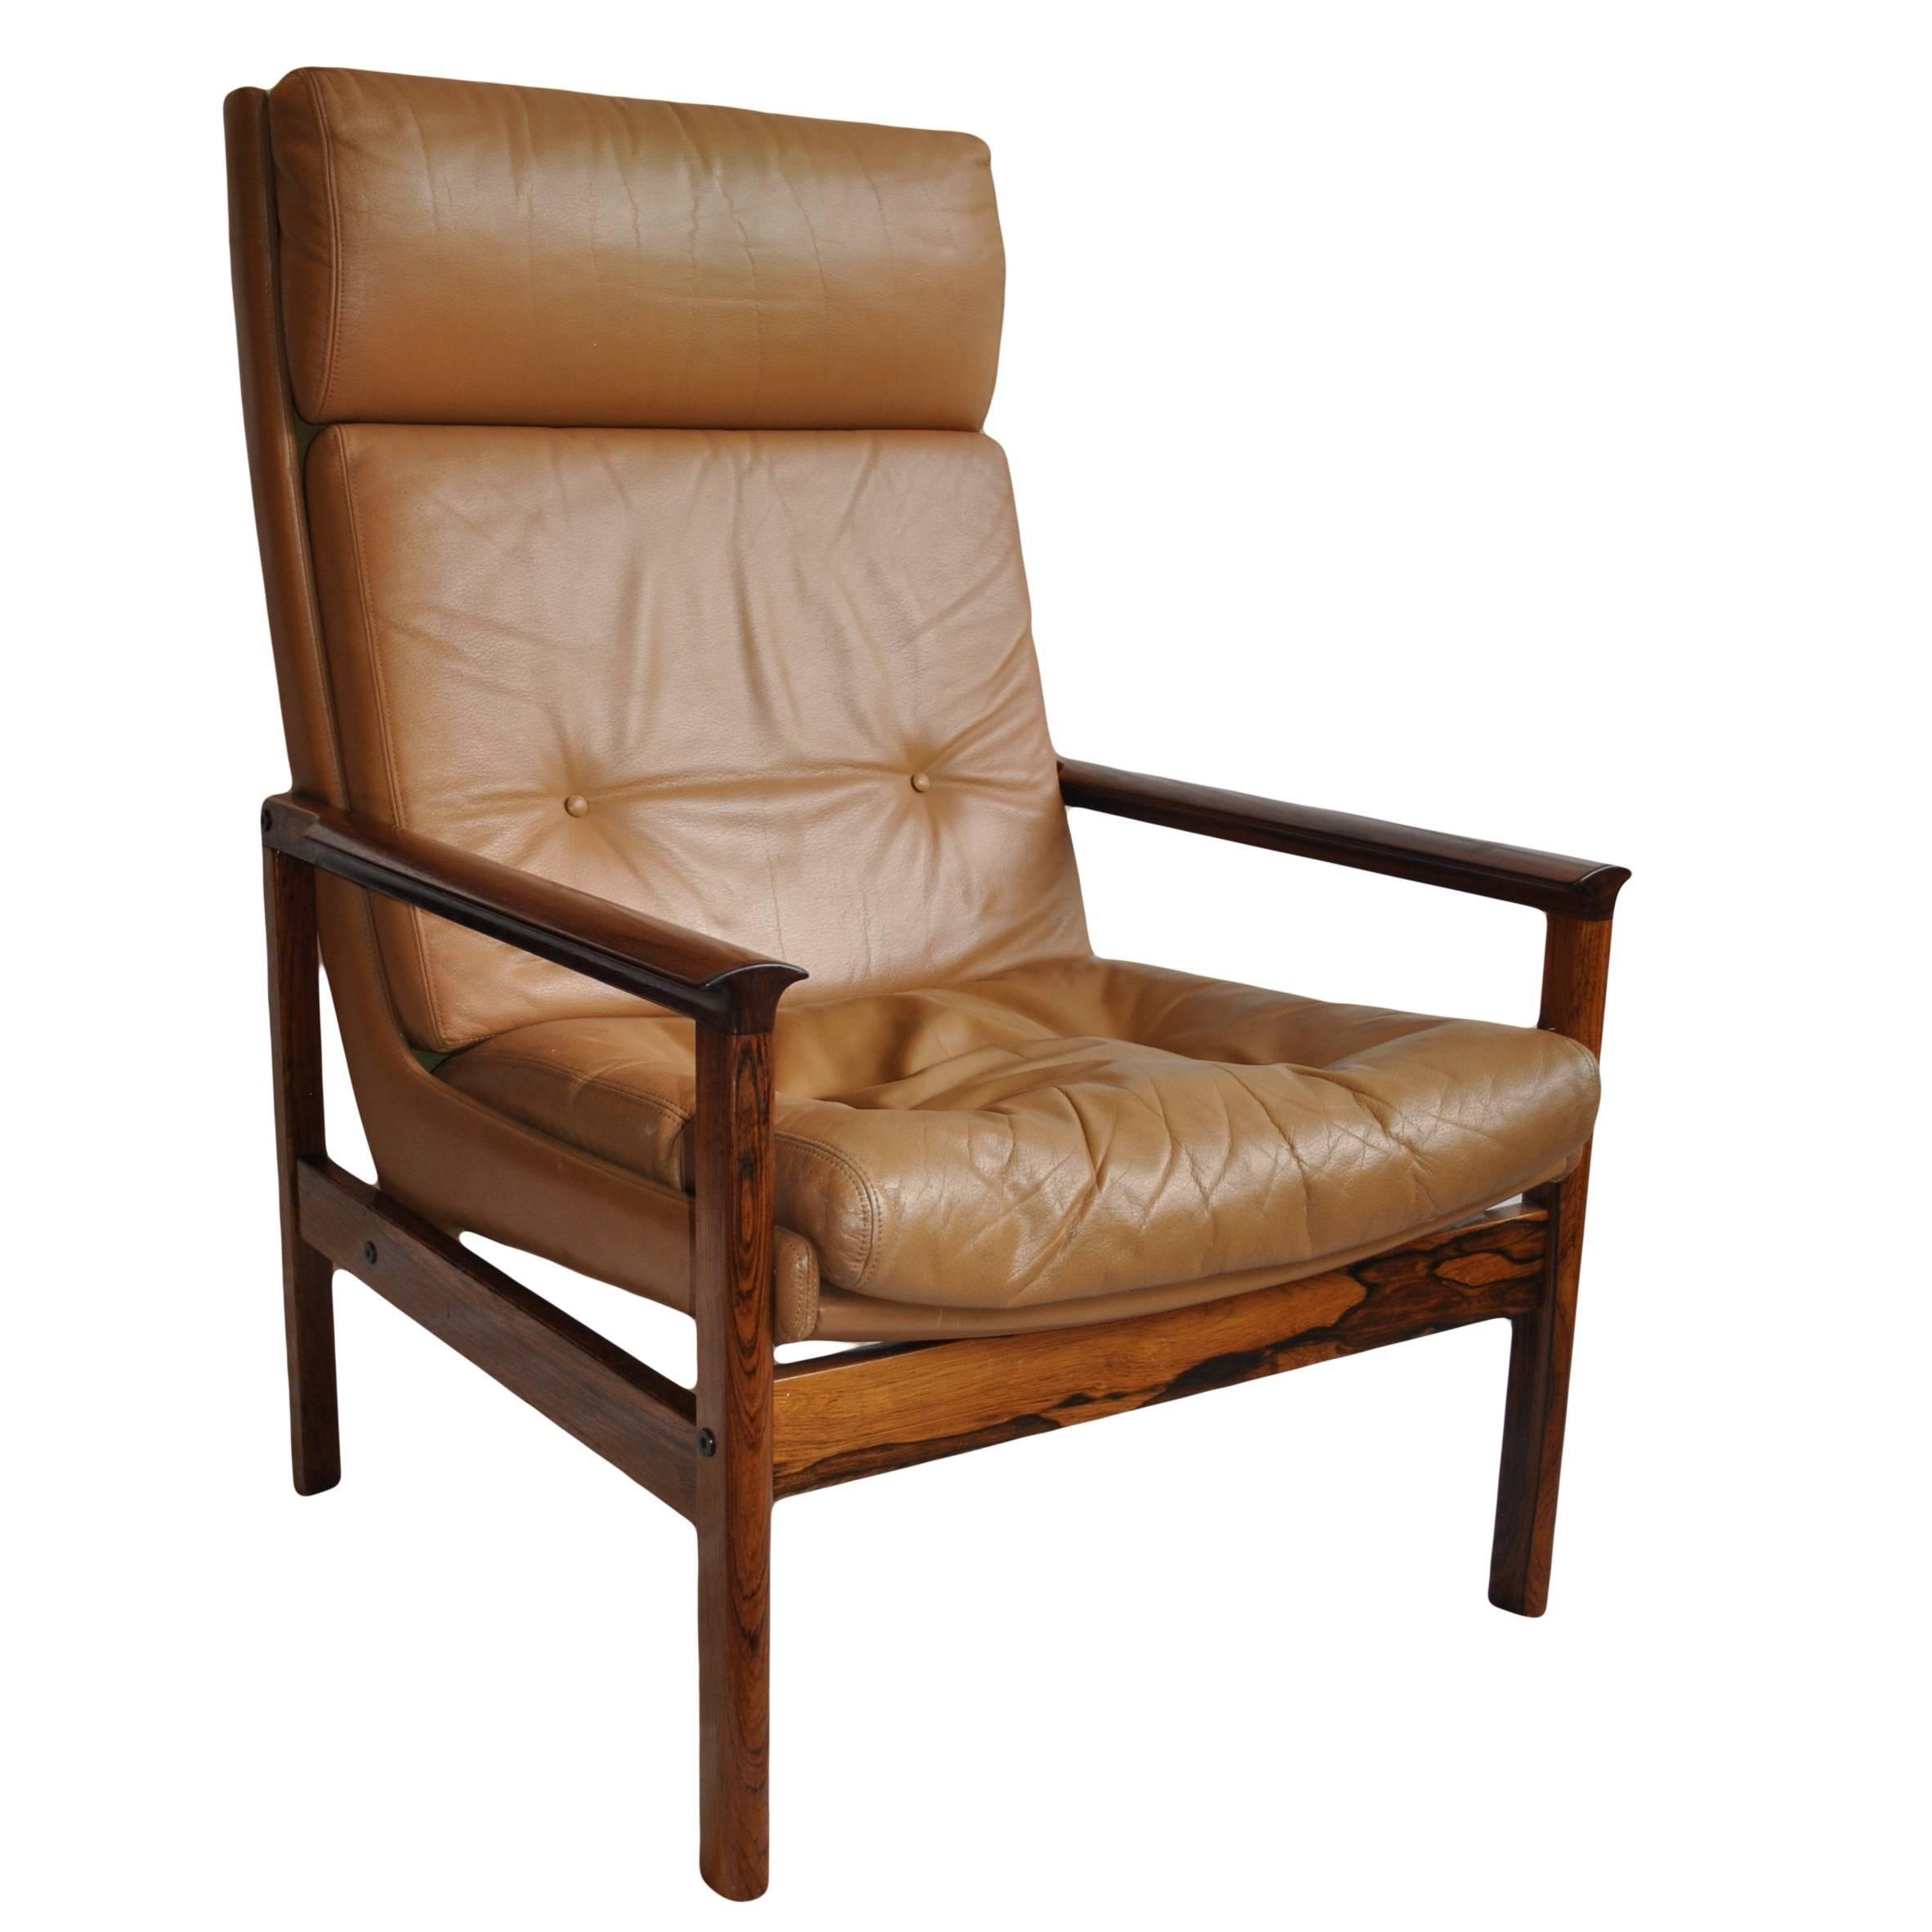 Mid-Century leather armchair and ottoman.